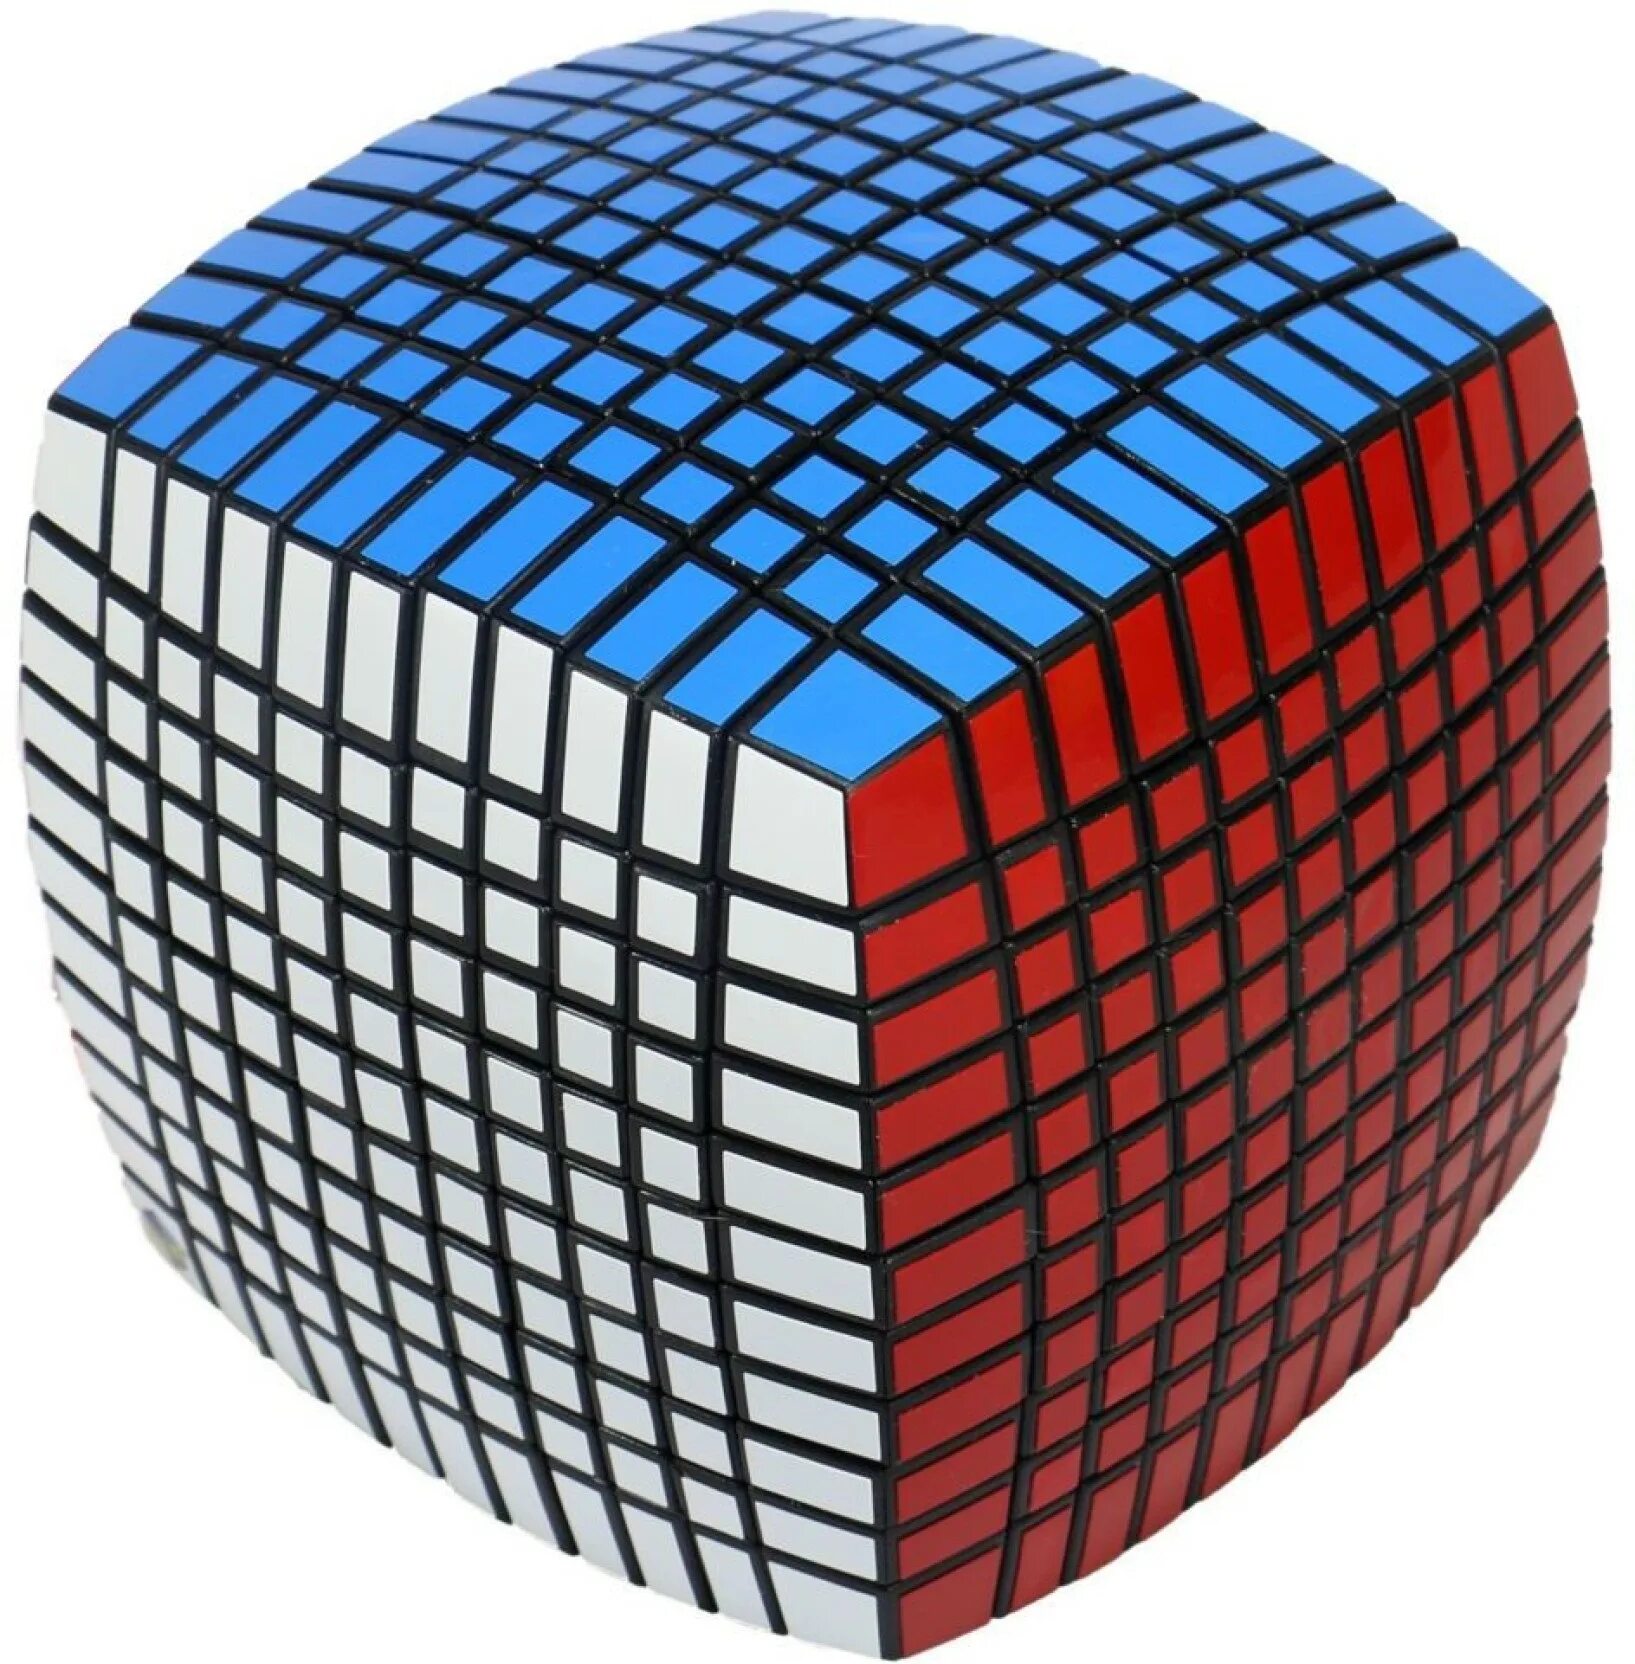 Кубик рубик 32х32. Кубик Рубика Magic Cube 533. Кубик рубик 32 на 32. Magic Cube 1001 цилиндр.